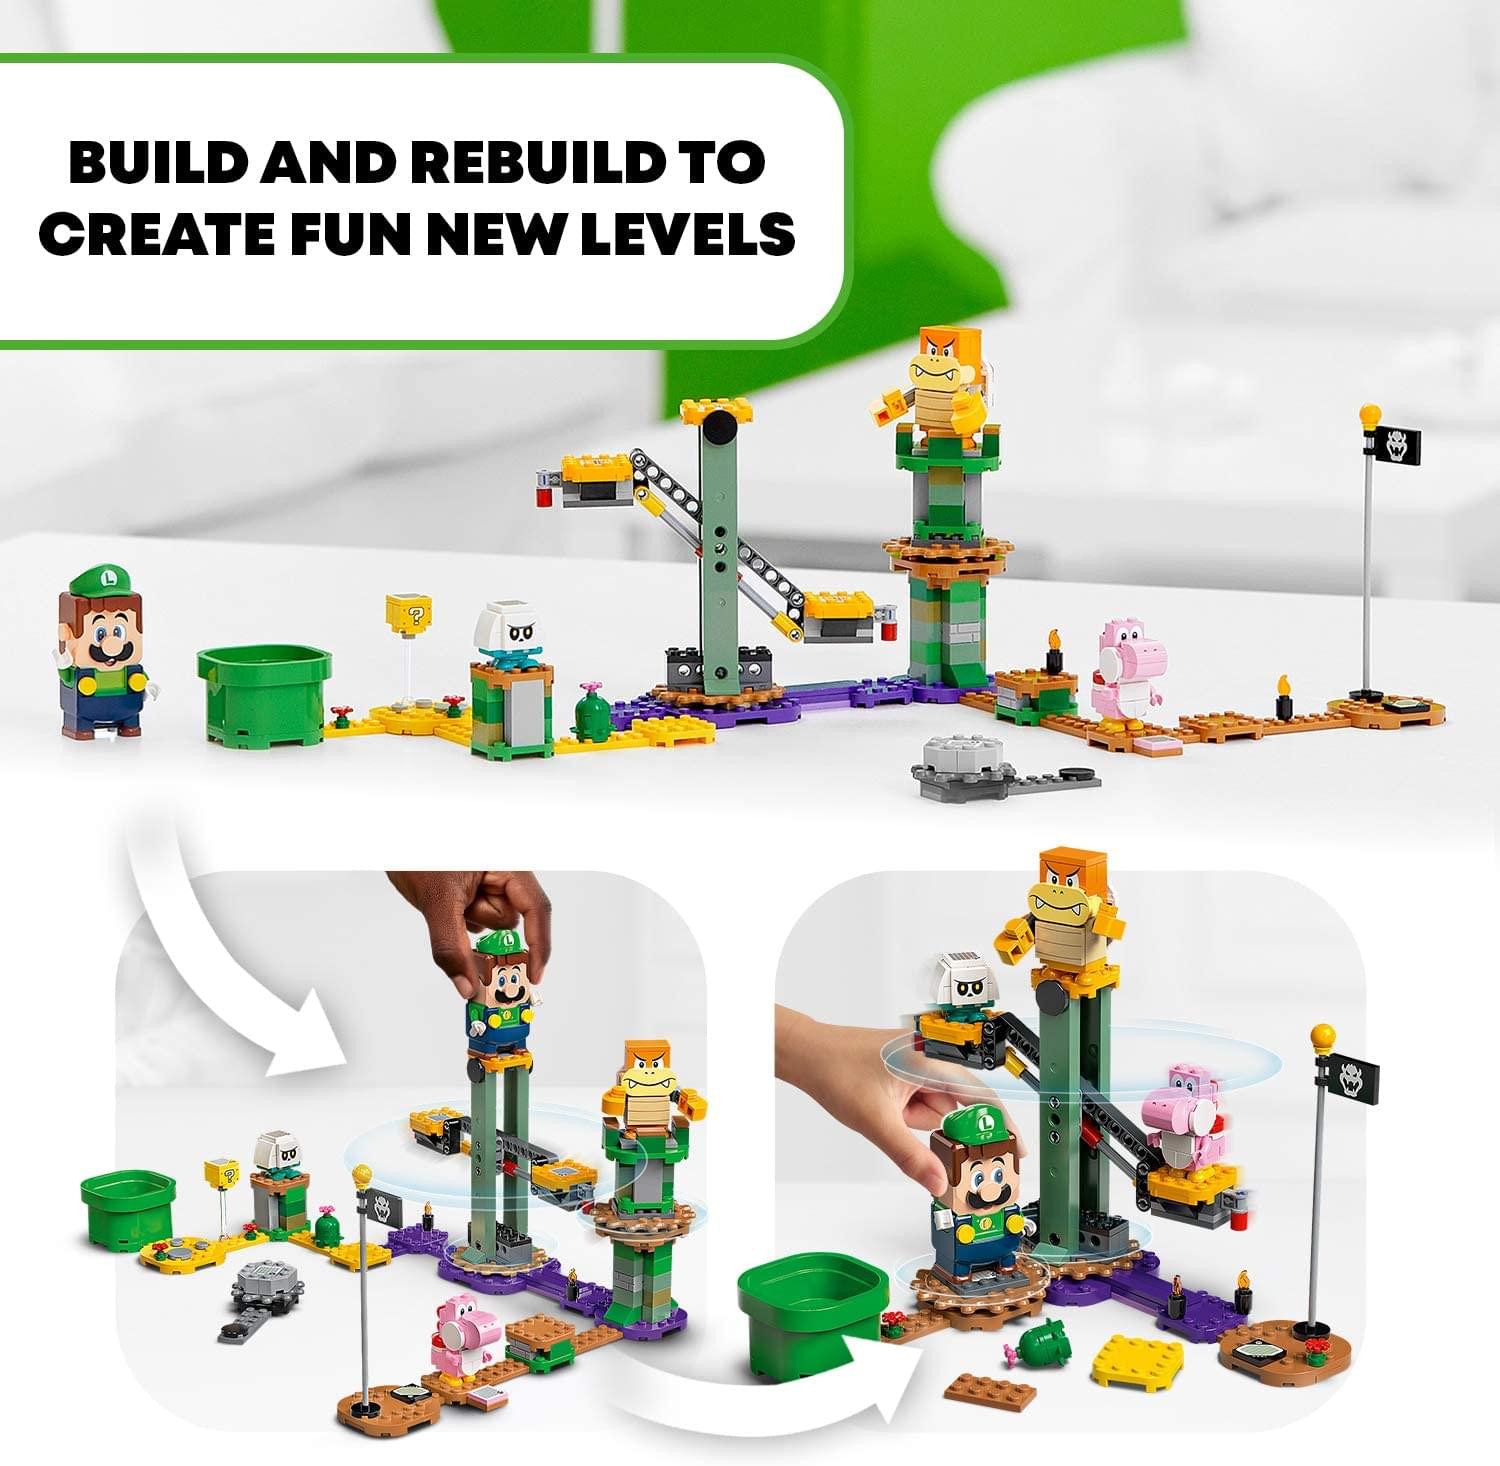 LEGO Super Mario 71387 Luigi Starter Course 280 Piece Building Kit